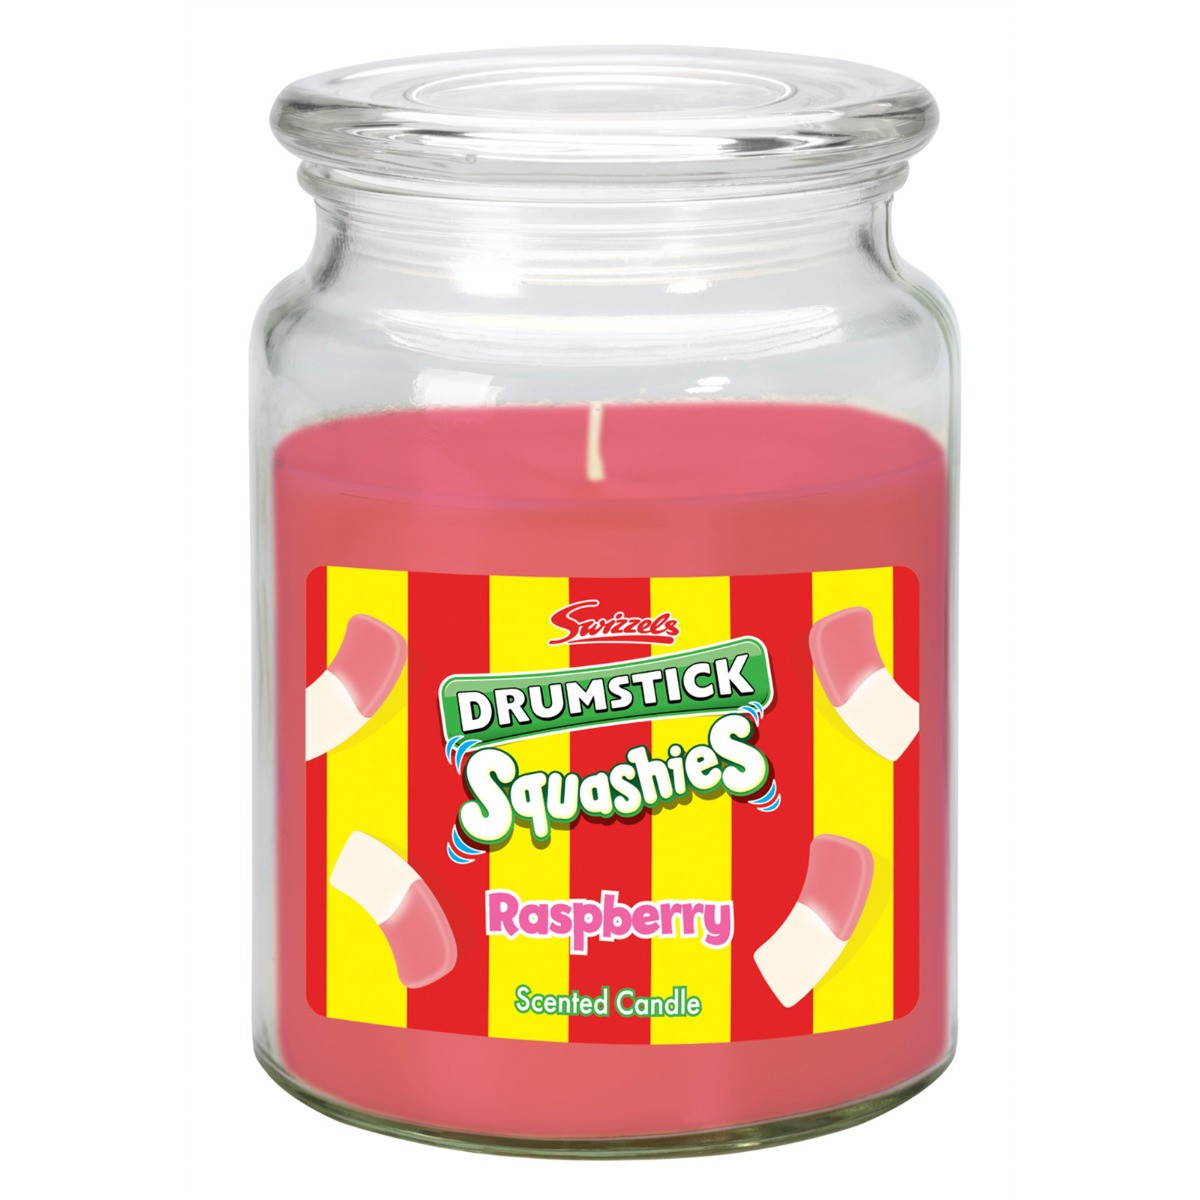 Swizzels 18oz Jar Candle - Drumstick Squashies Raspberry>